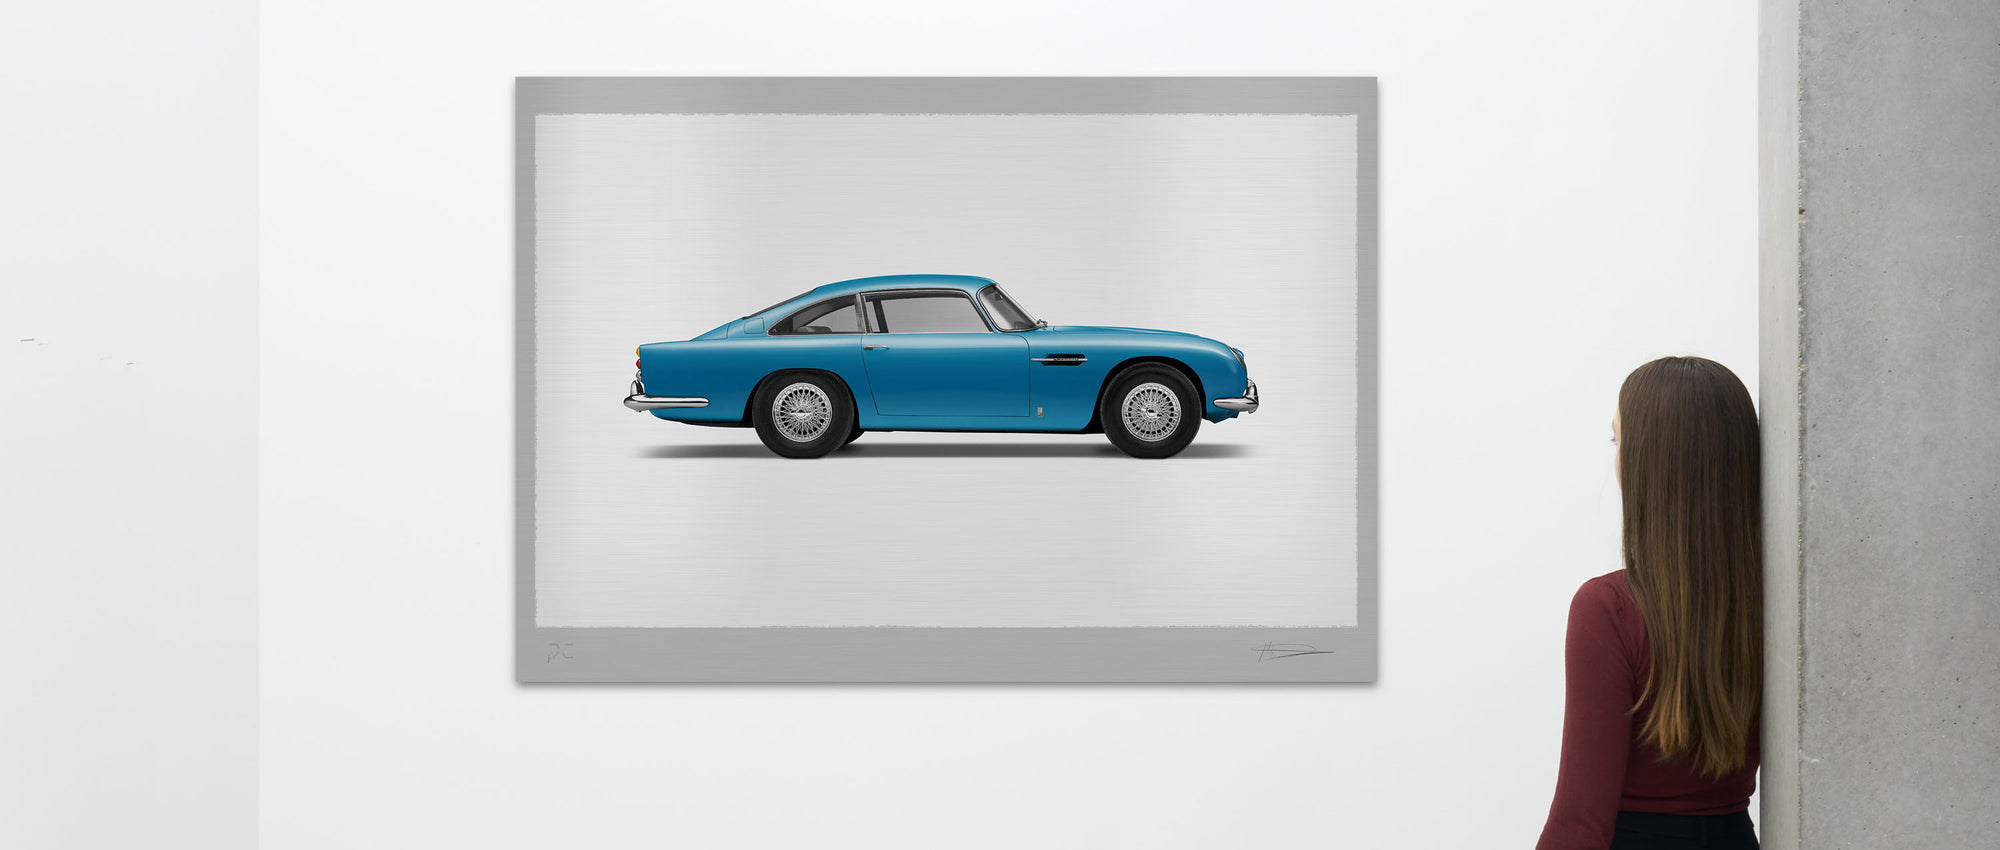 Aston Martin DB5 Vantage – Amalgam Collection